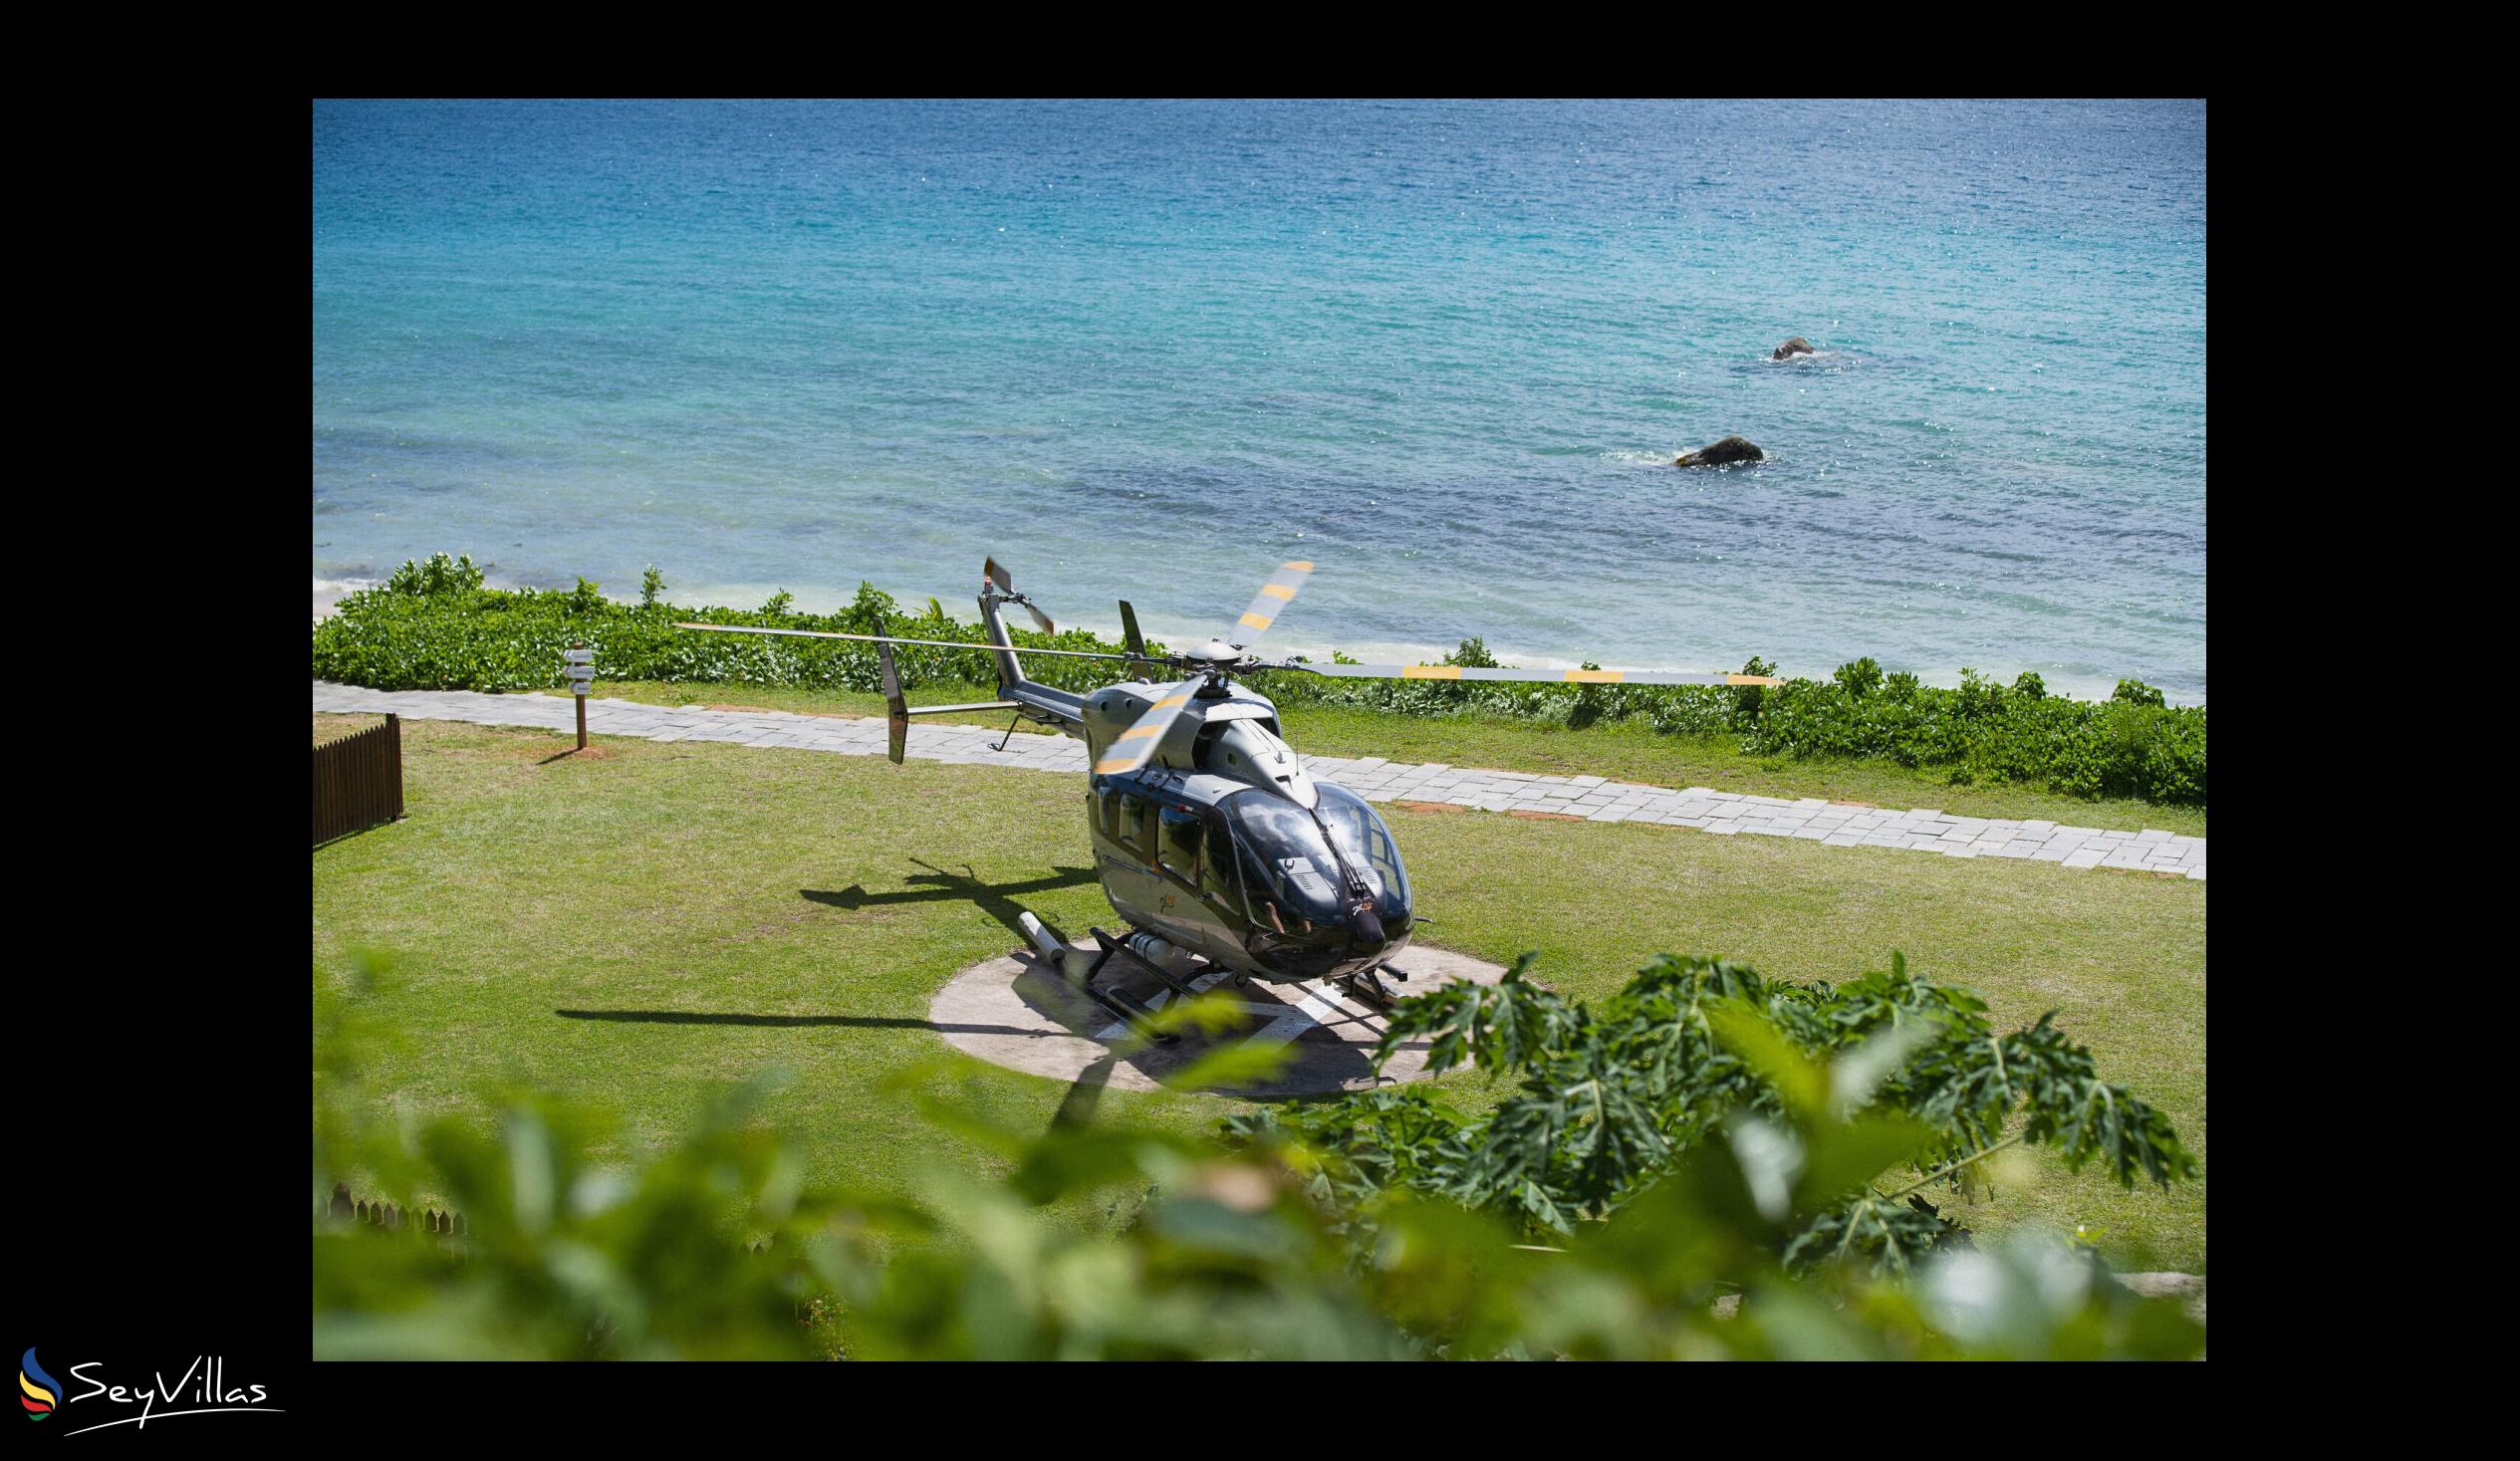 Photo 48: Raffles - Outdoor area - Praslin (Seychelles)